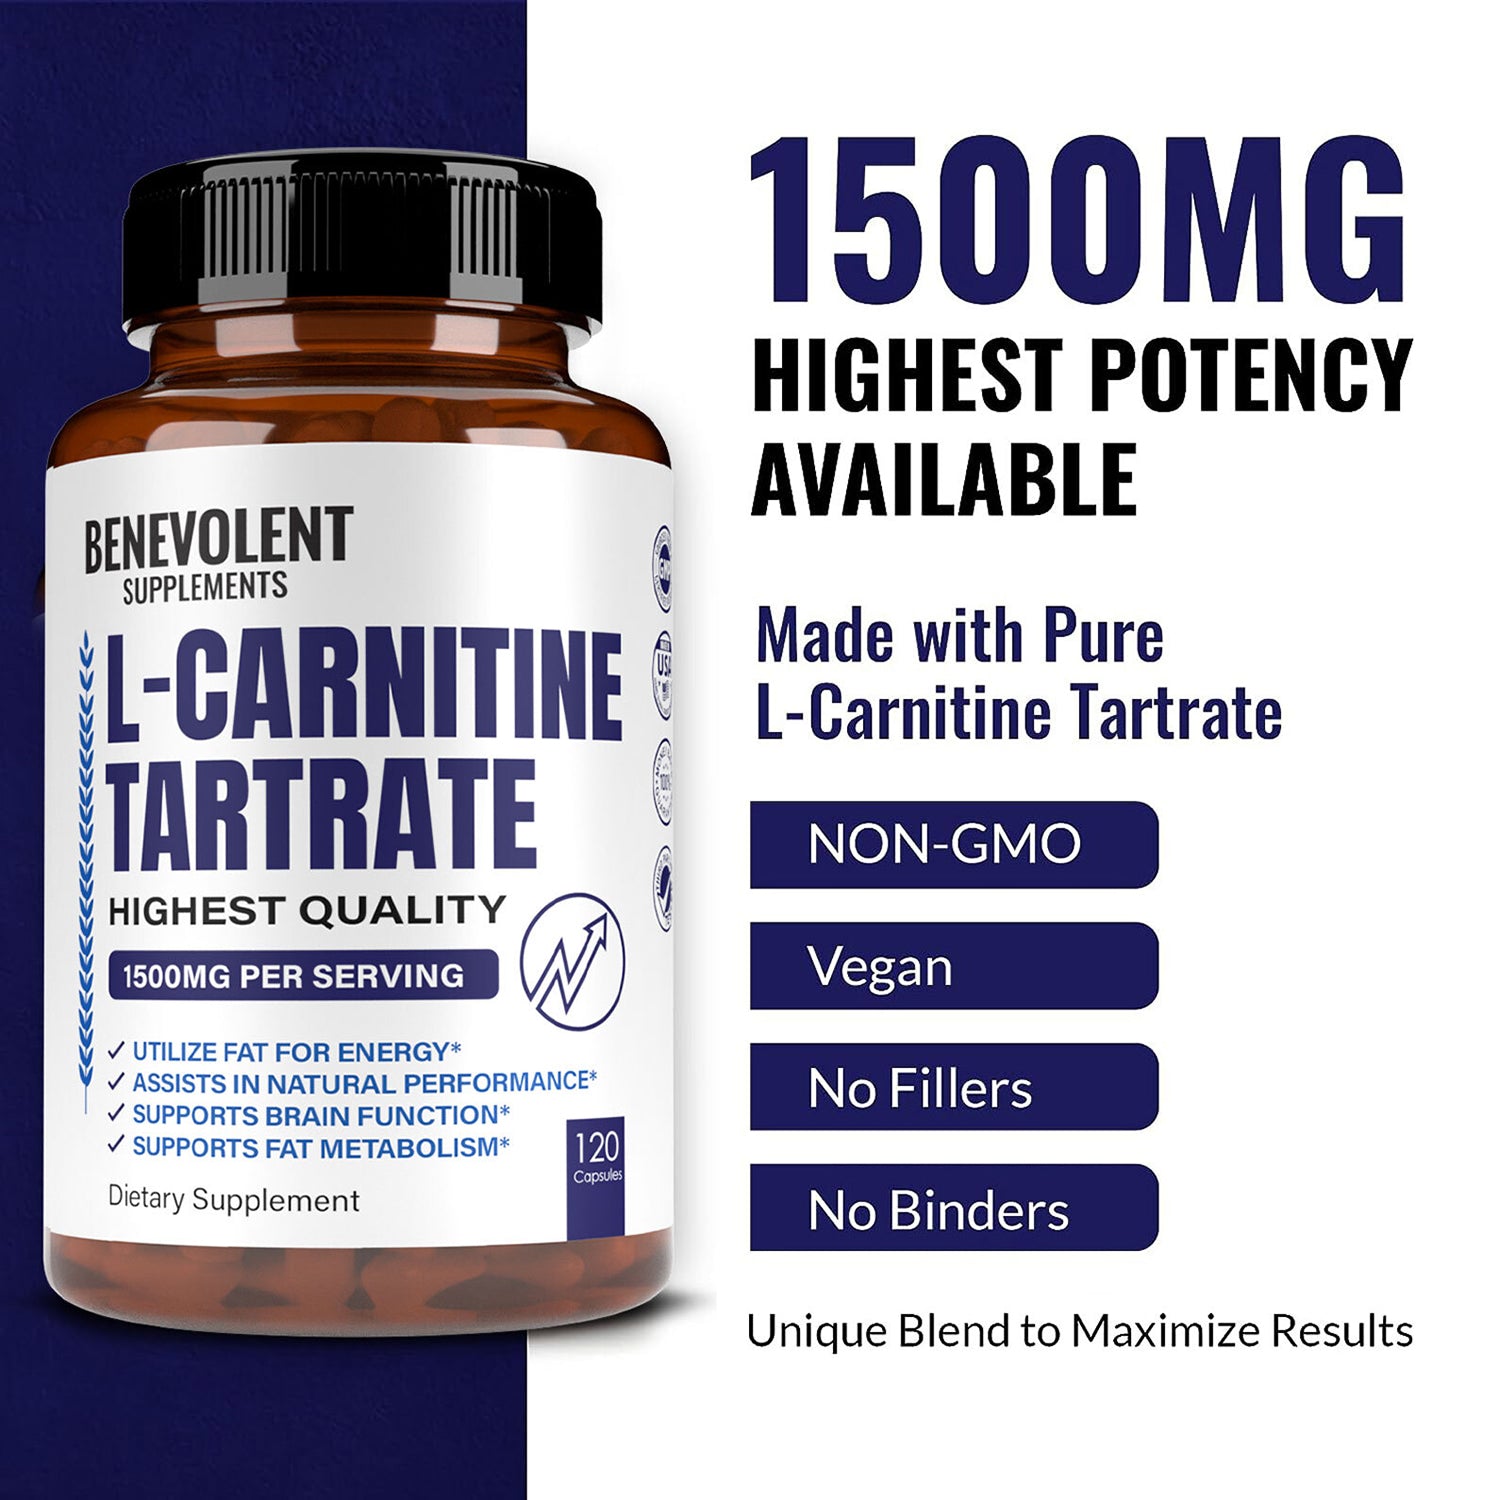 L-Carnitine Tartrate qualities